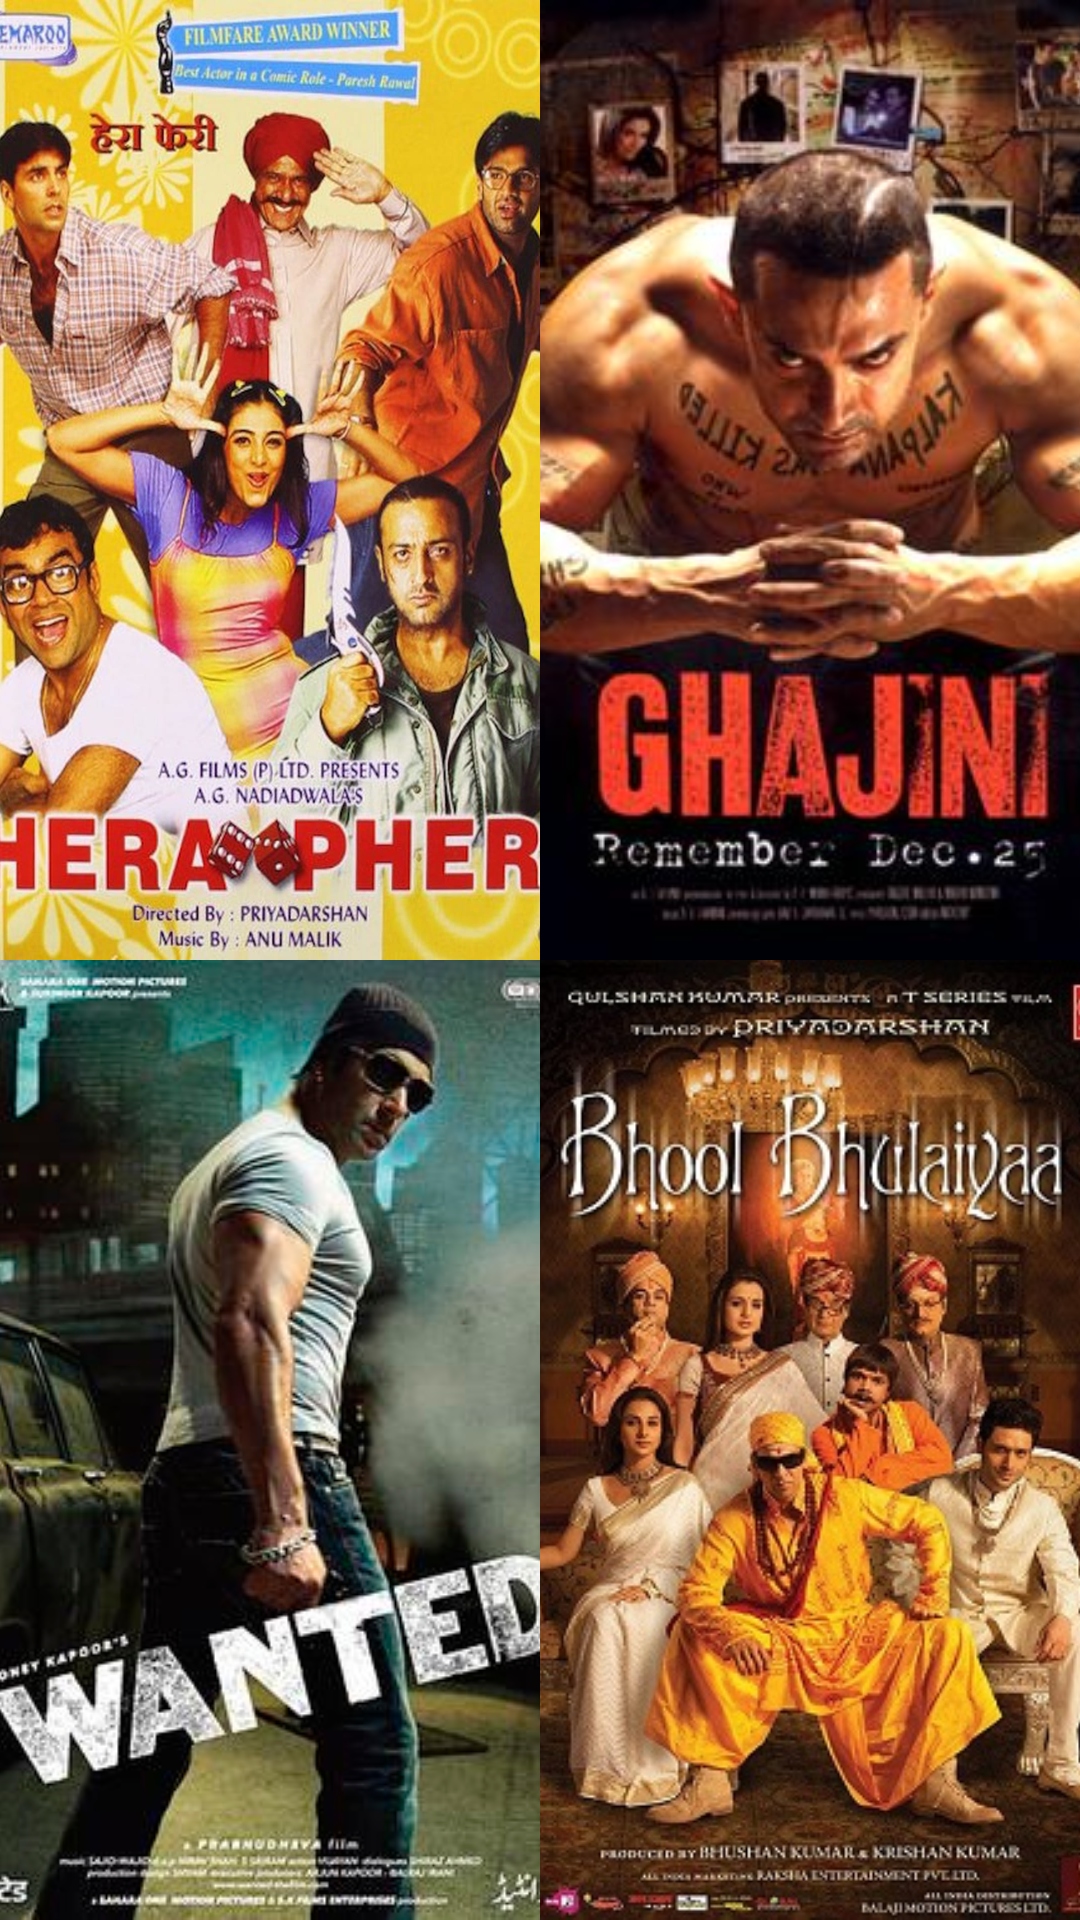 From Hera Pheri to Ghajini: Famous Hindi remakes of South movies 